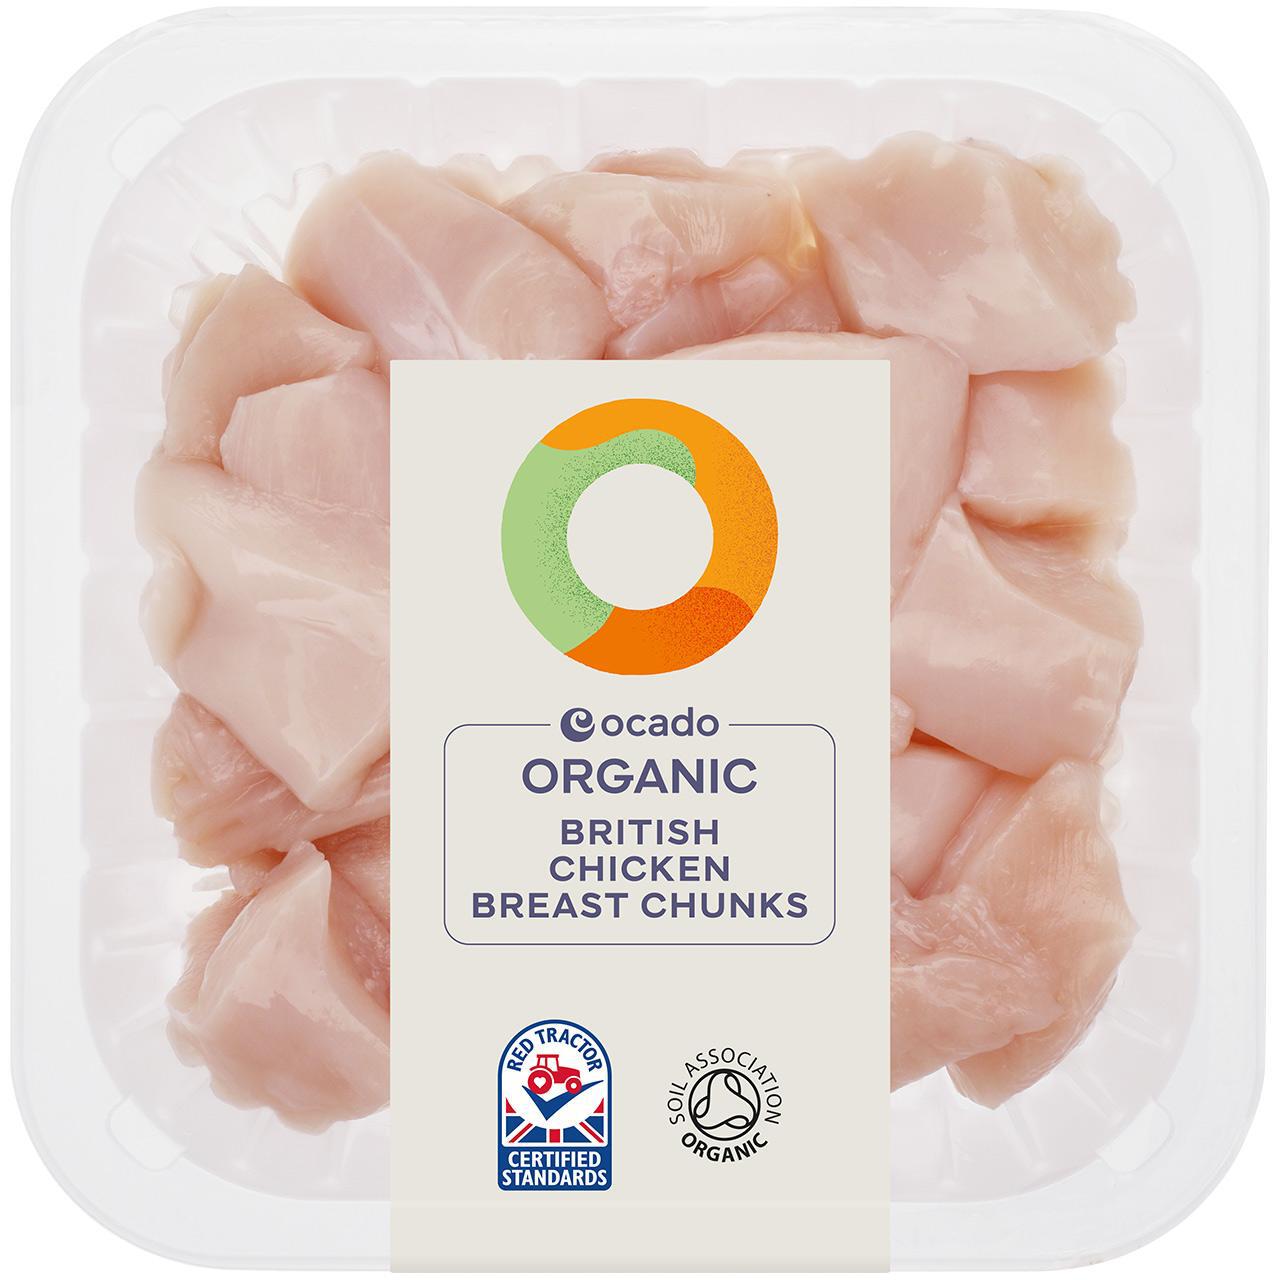 Ocado Organic Free Range Chicken Breast Chunks 350g